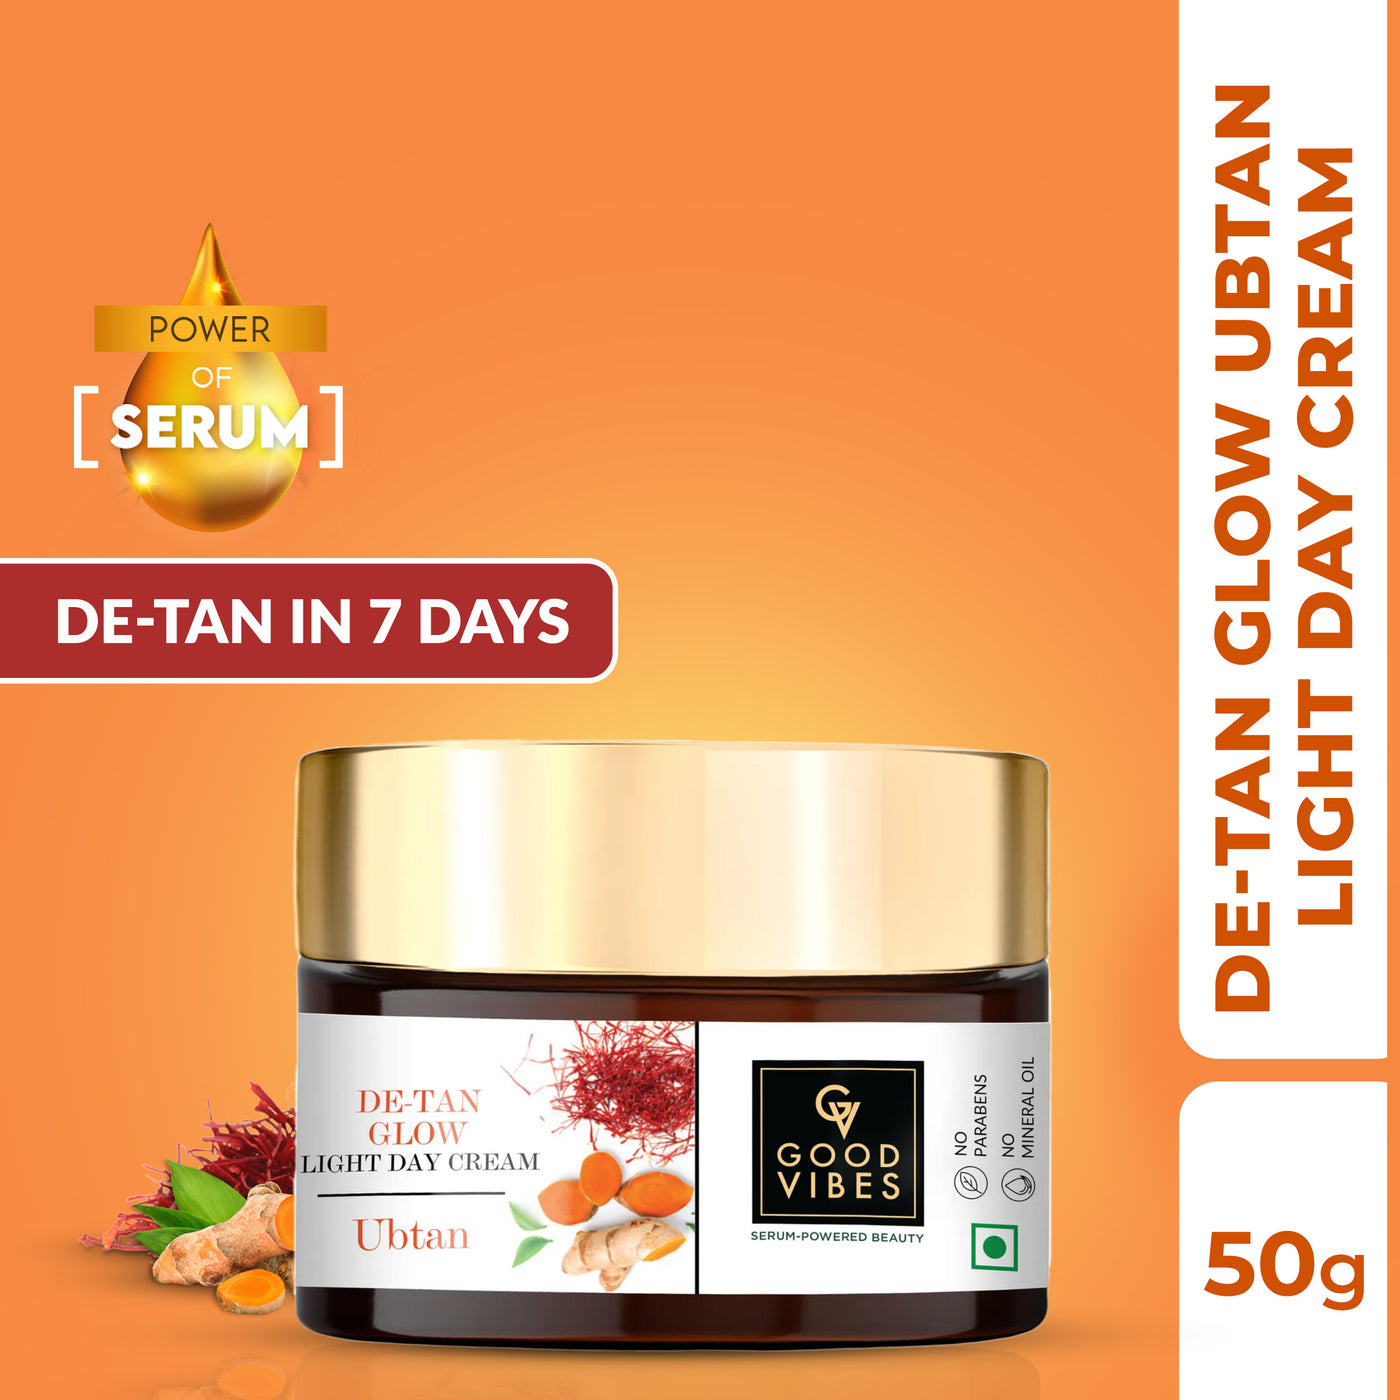 Ubtan De-Tan Glow Light Day Cream with Power of Serum